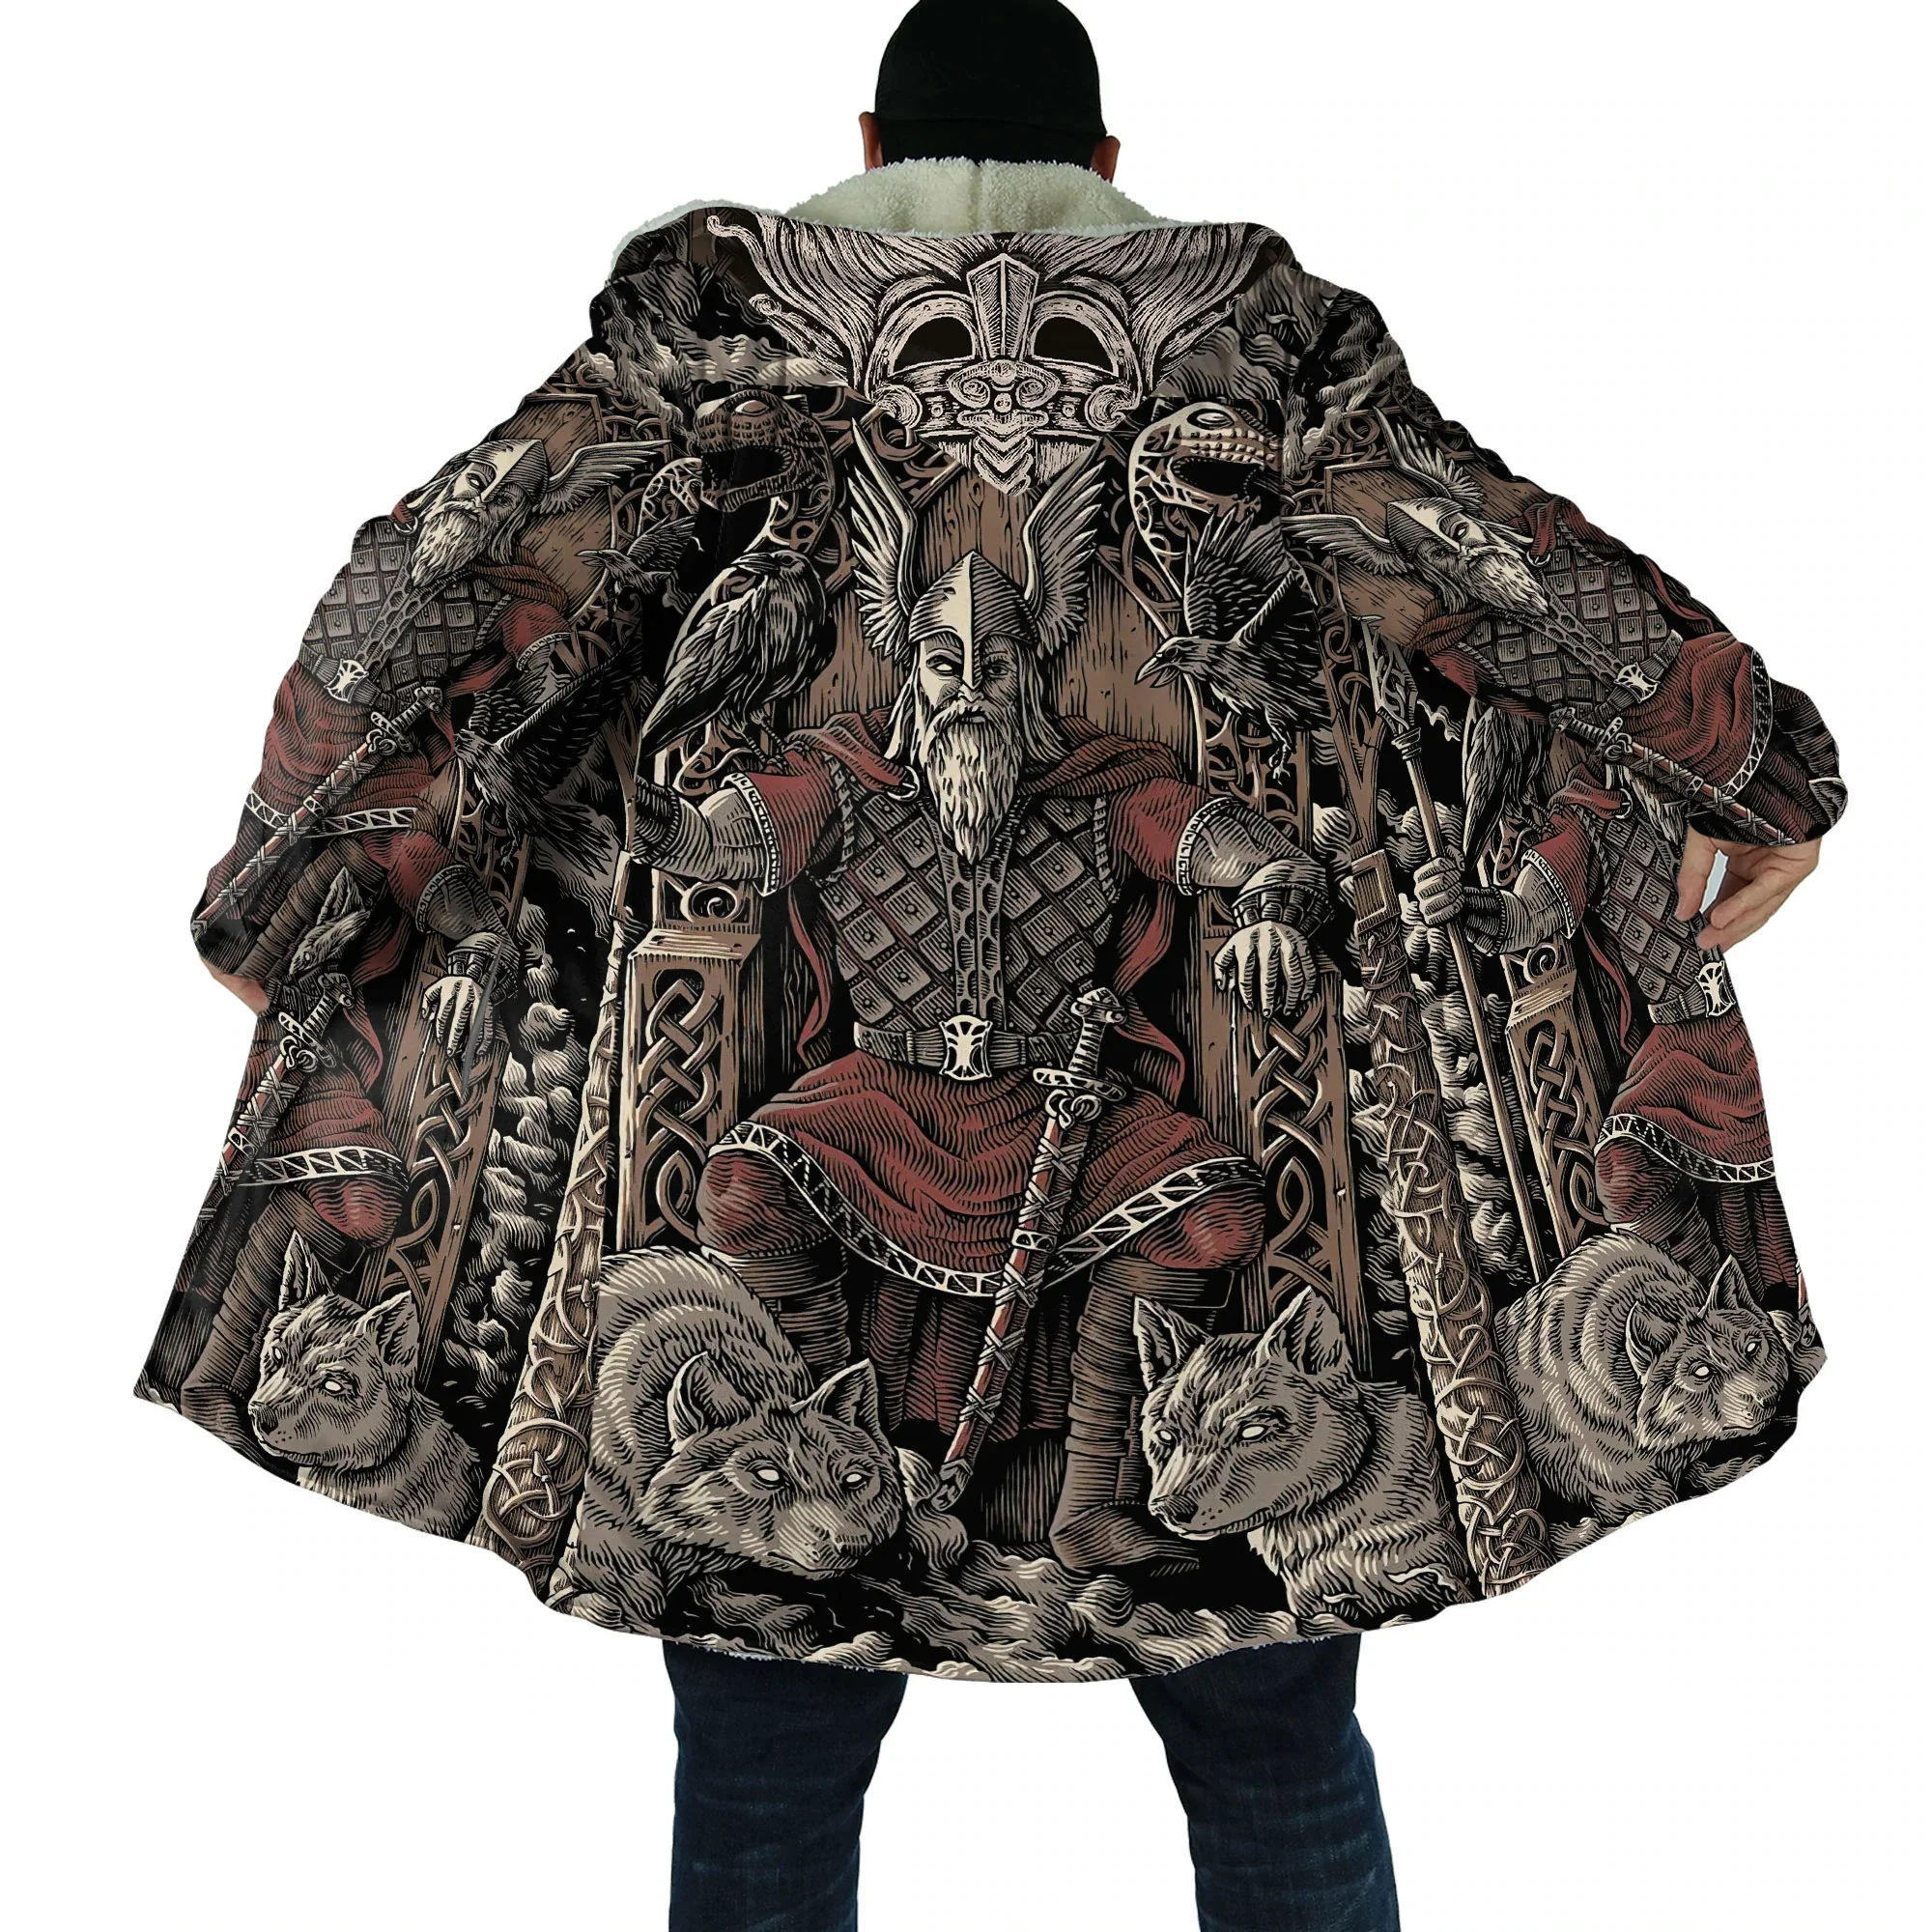 

CLOOCL Winter Men's Hooded Cloak Viking Tattoo 3D Graphics Printed Fleece Hooded Coat Women Casual Jacket Thick Warm Cape Coats